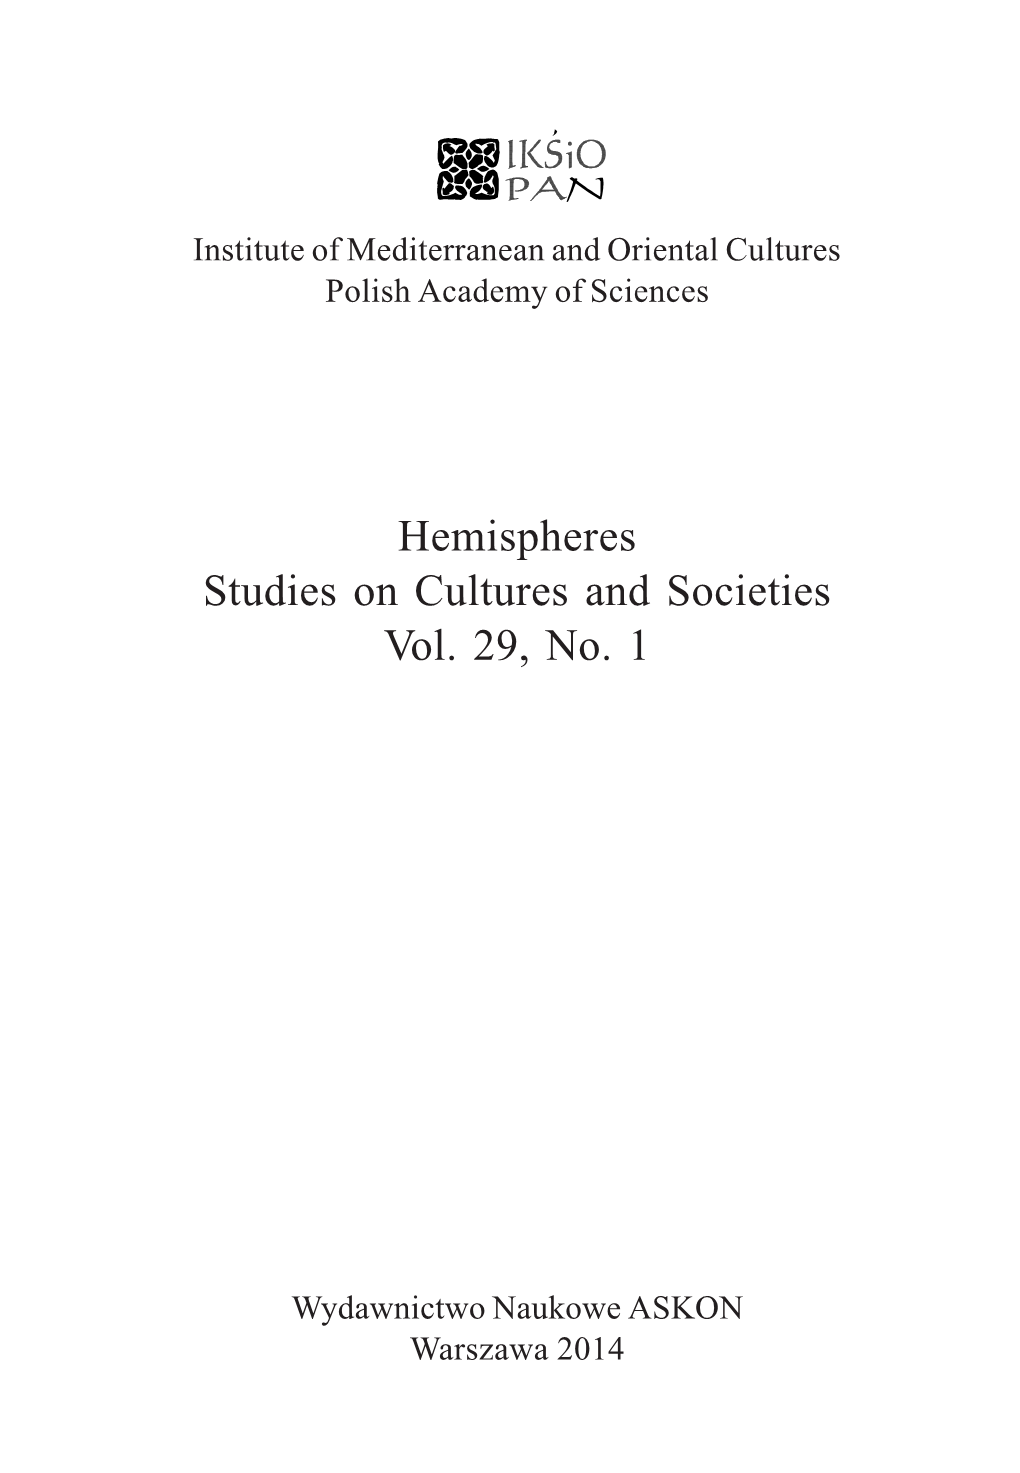 Hemispheres Studies on Cultures and Societies Vol. 29, No. 1